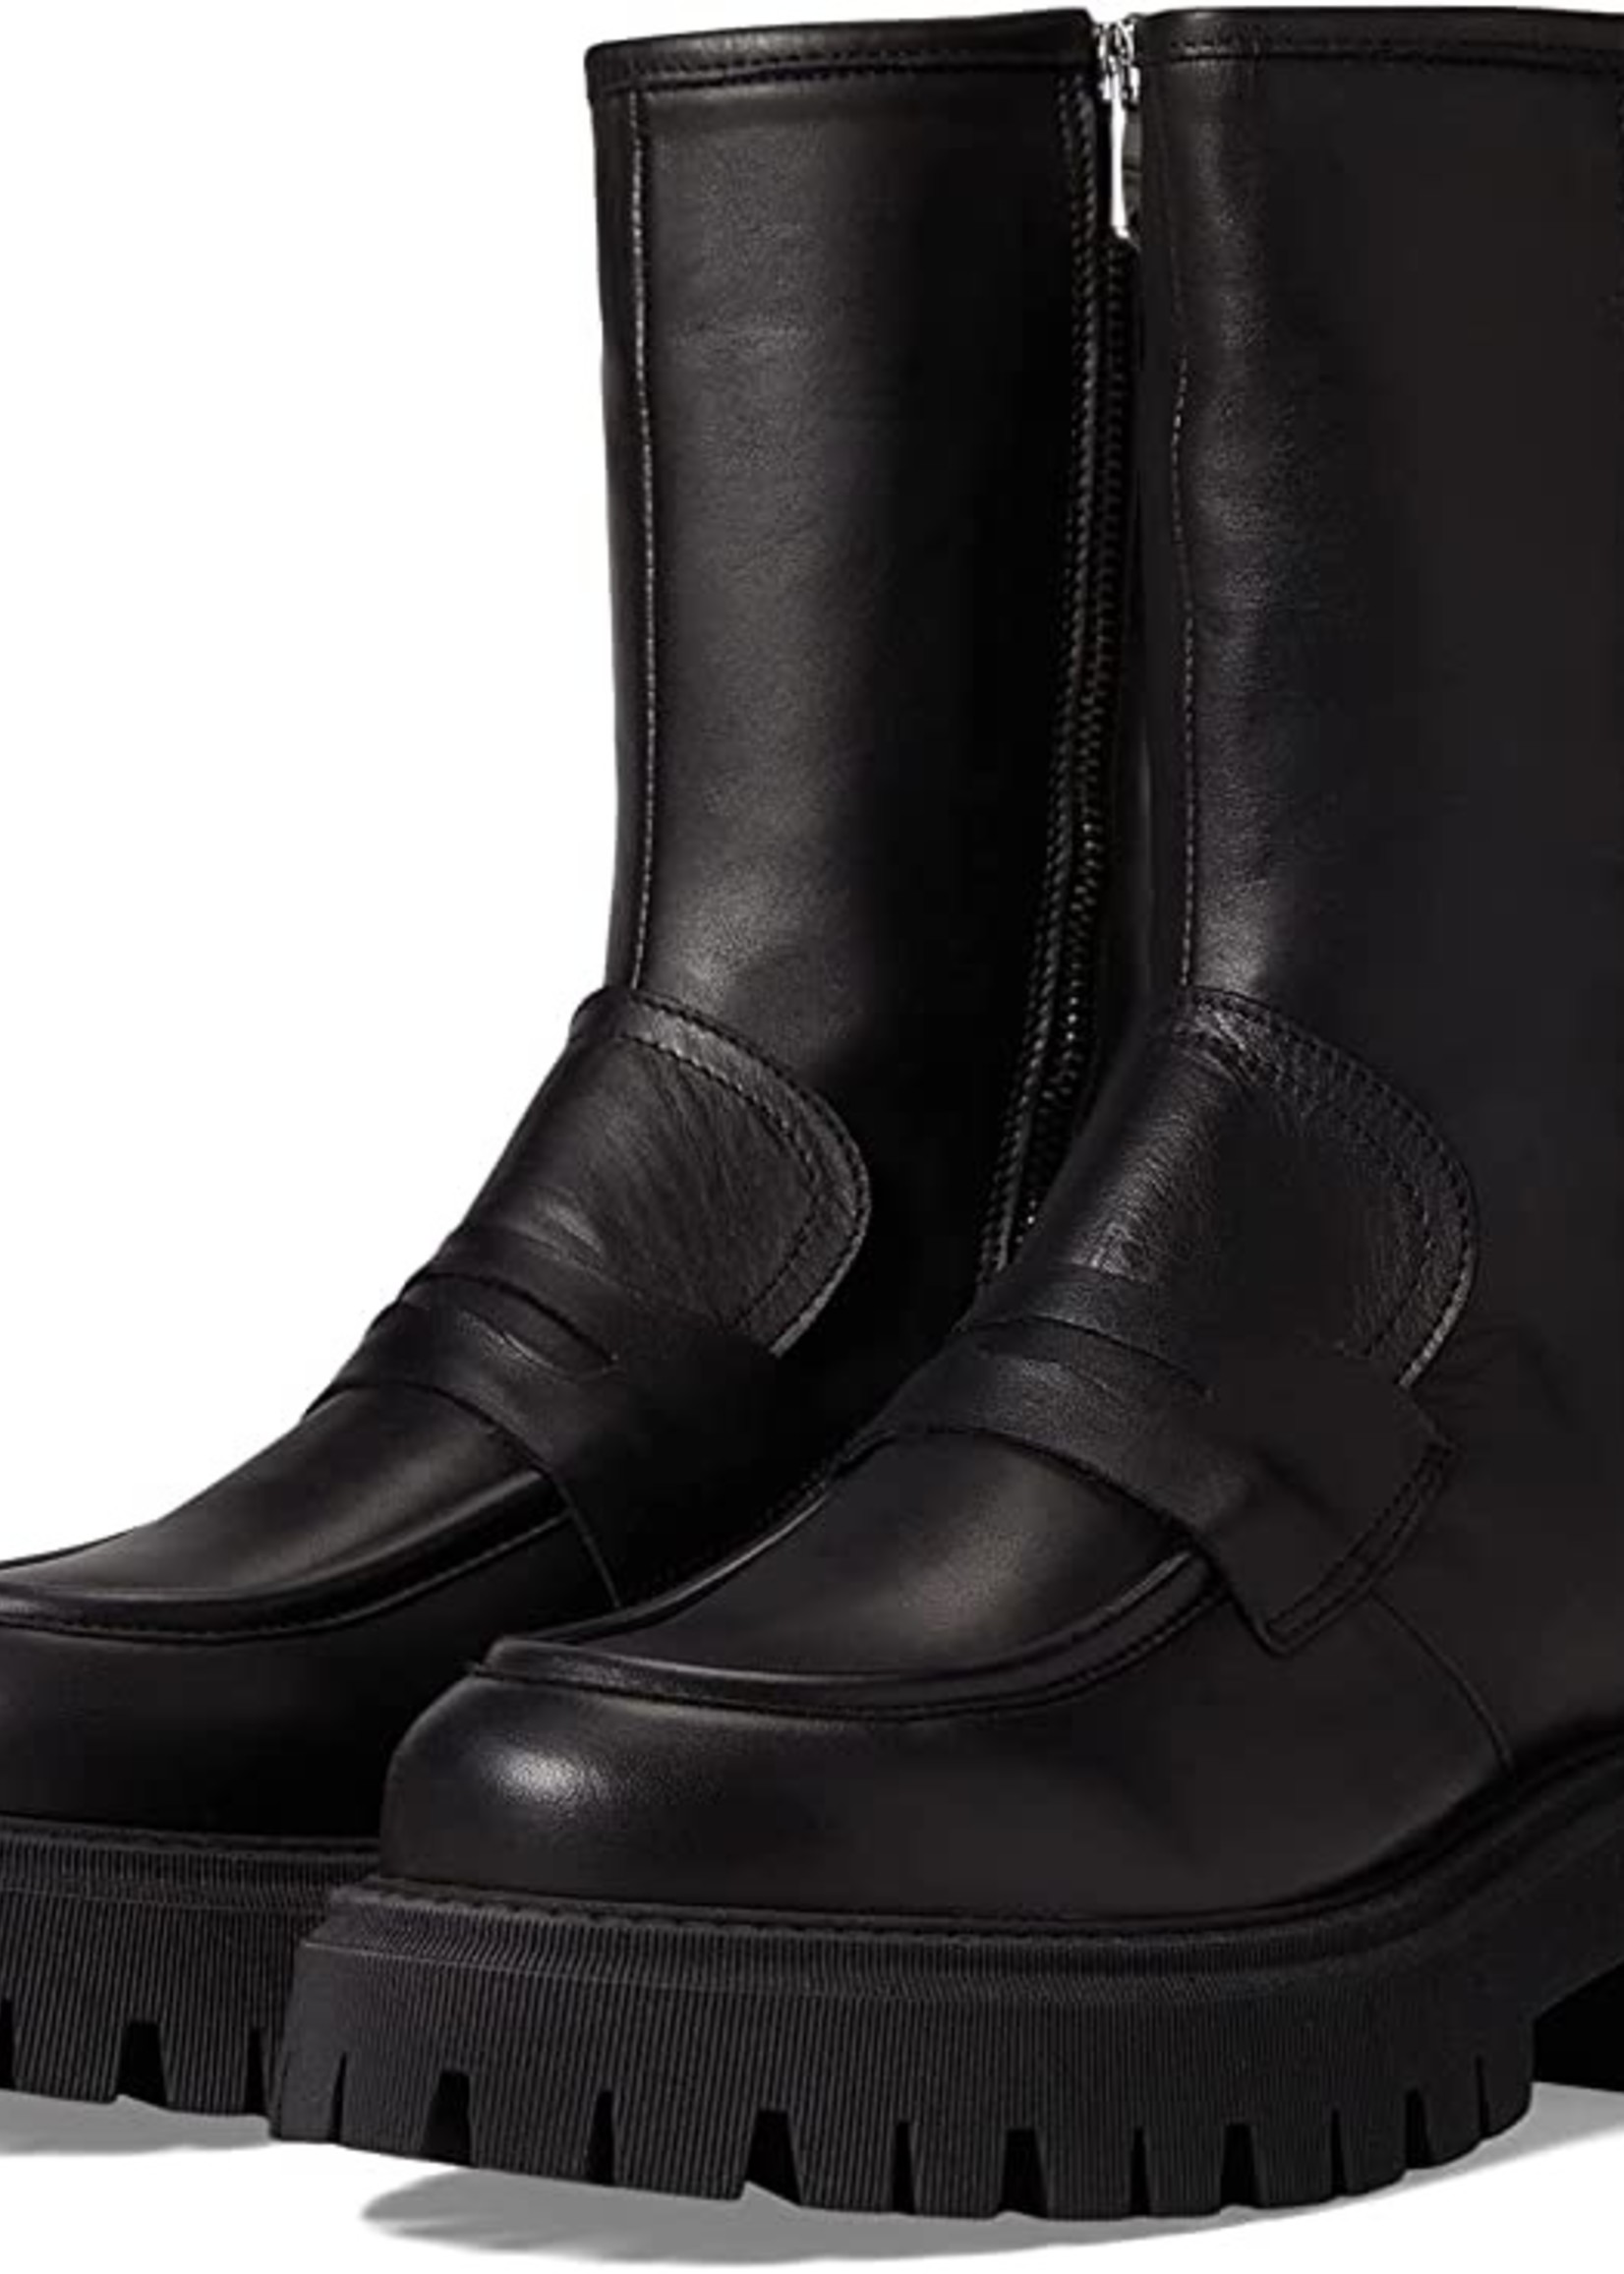 https://cdn.shoplightspeed.com/shops/663423/files/51438742/1652x2313x1/free-people-fp-madison-loafer-boot-black.jpg